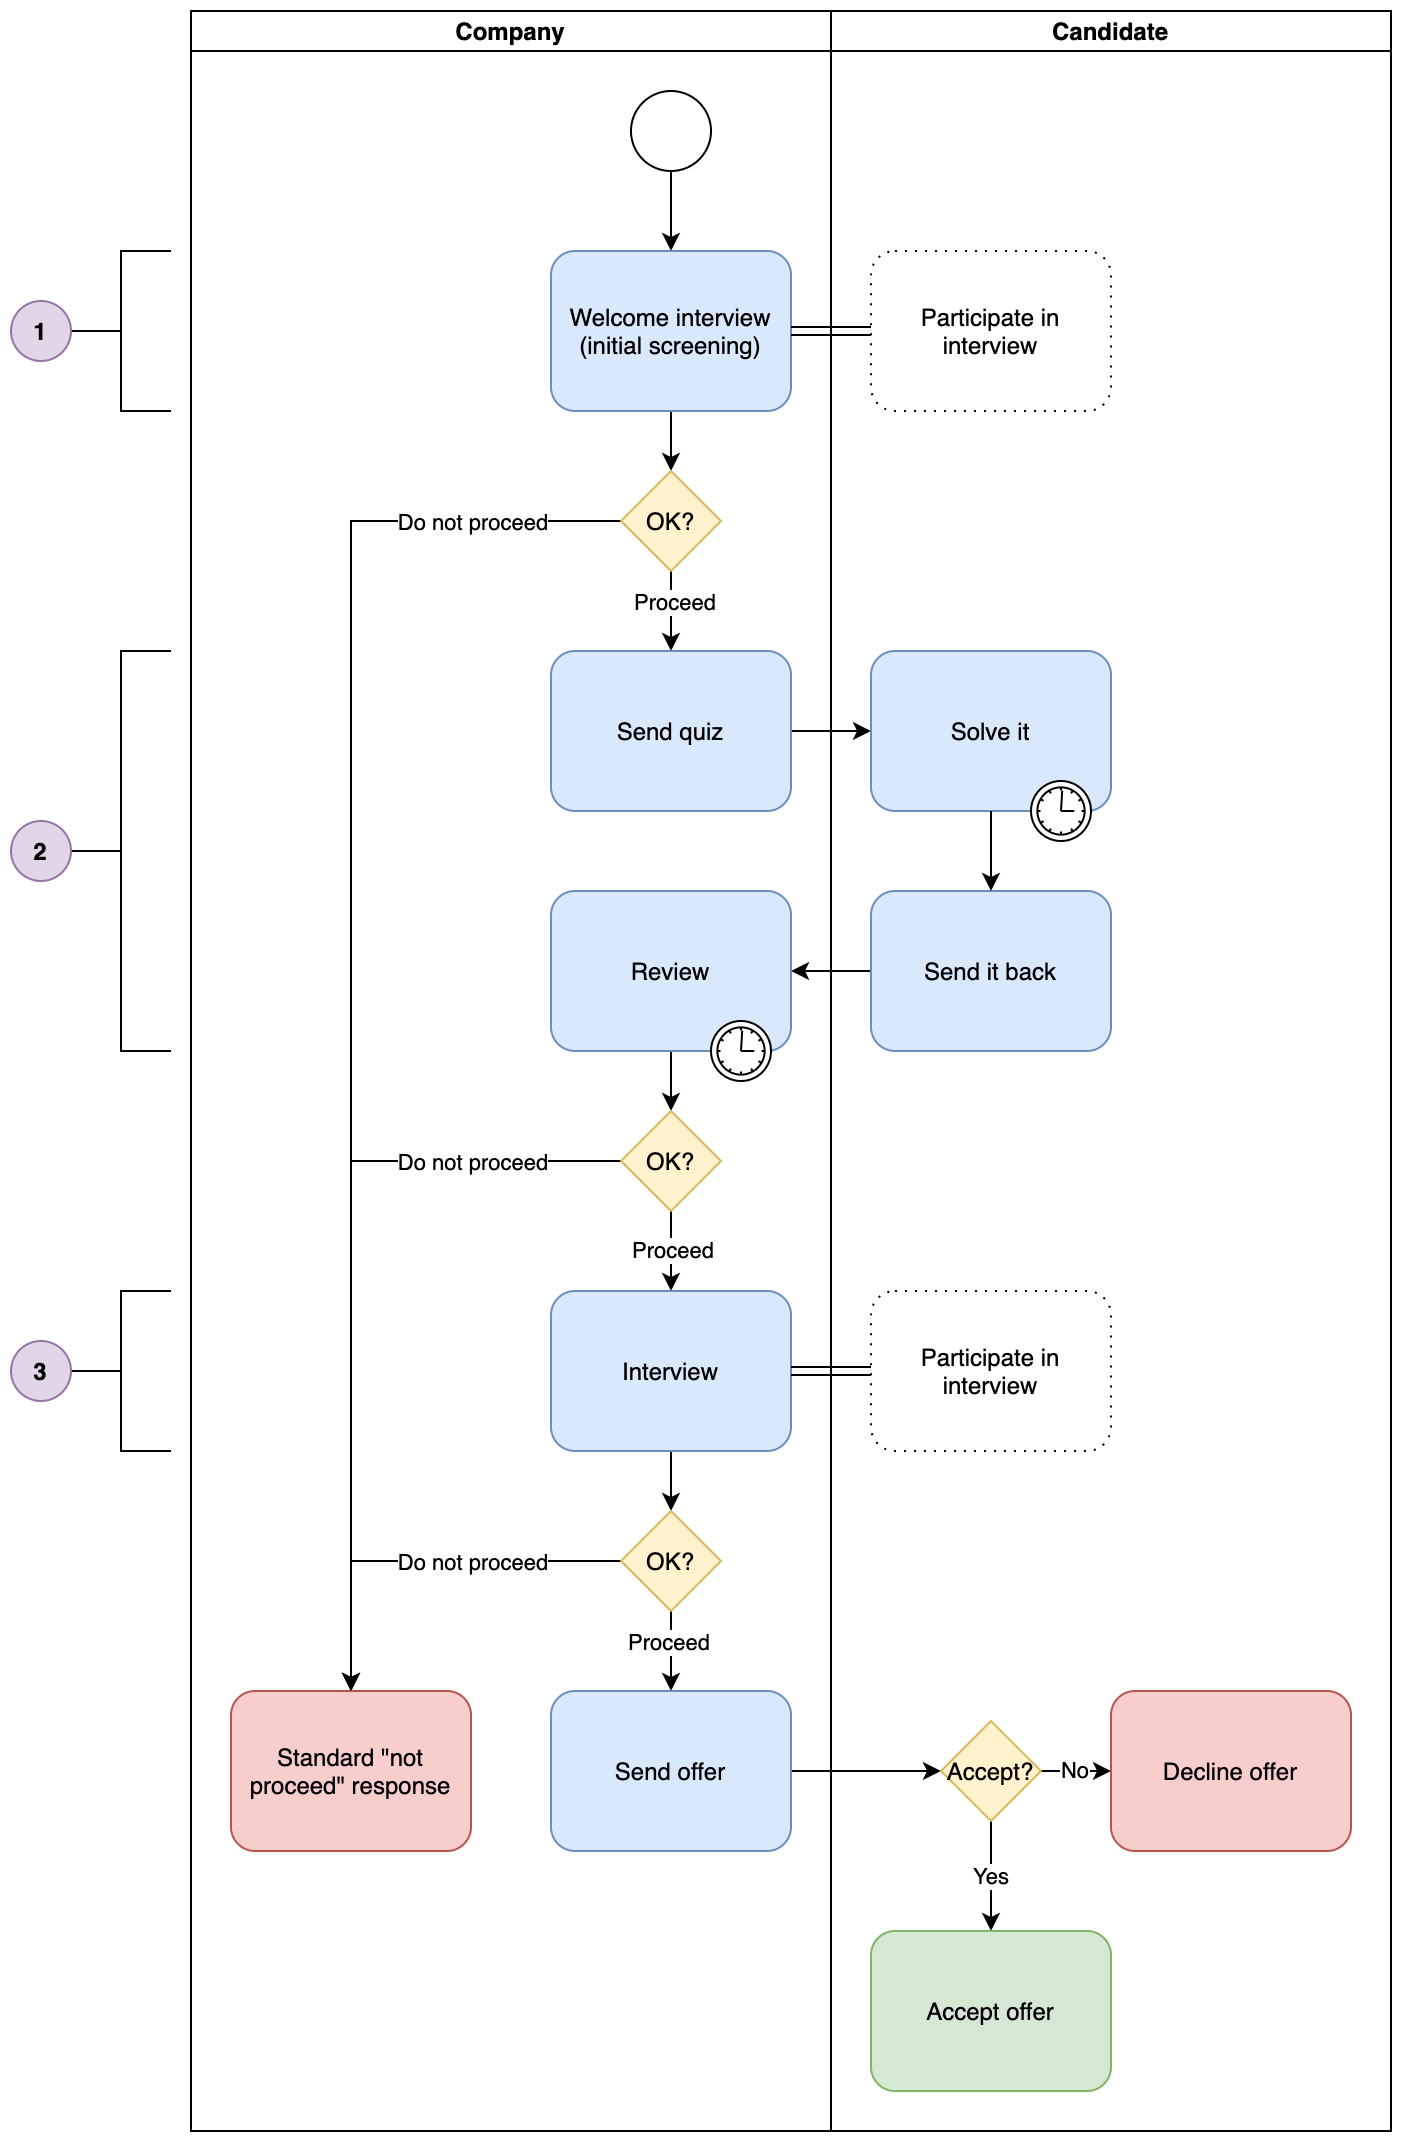 2.2. Process graph